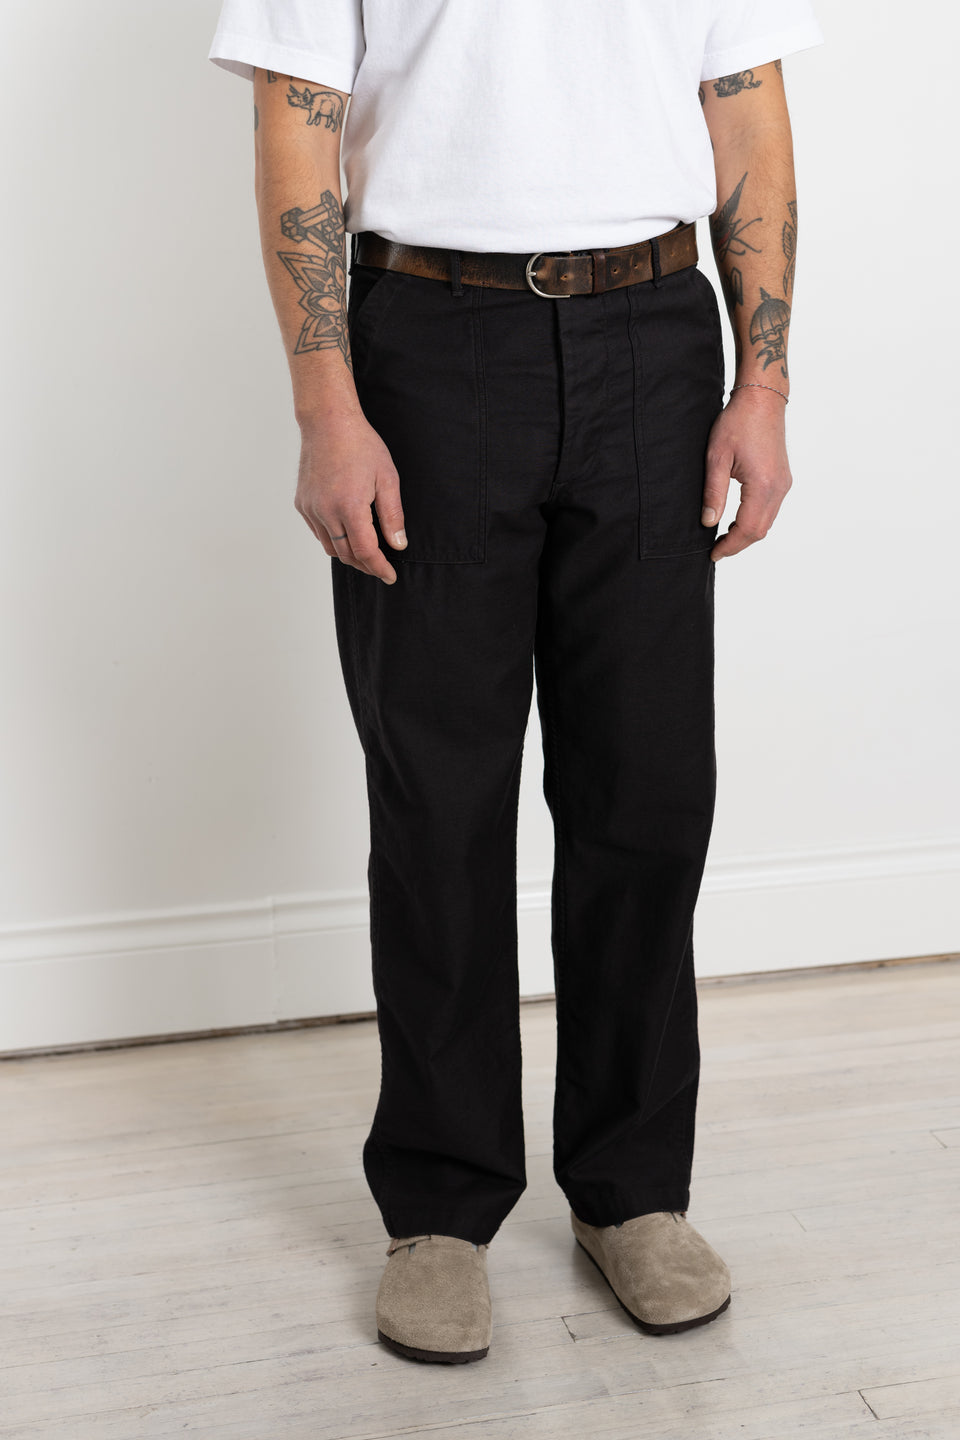 US Army Fatigue Pants Regular Fit Black